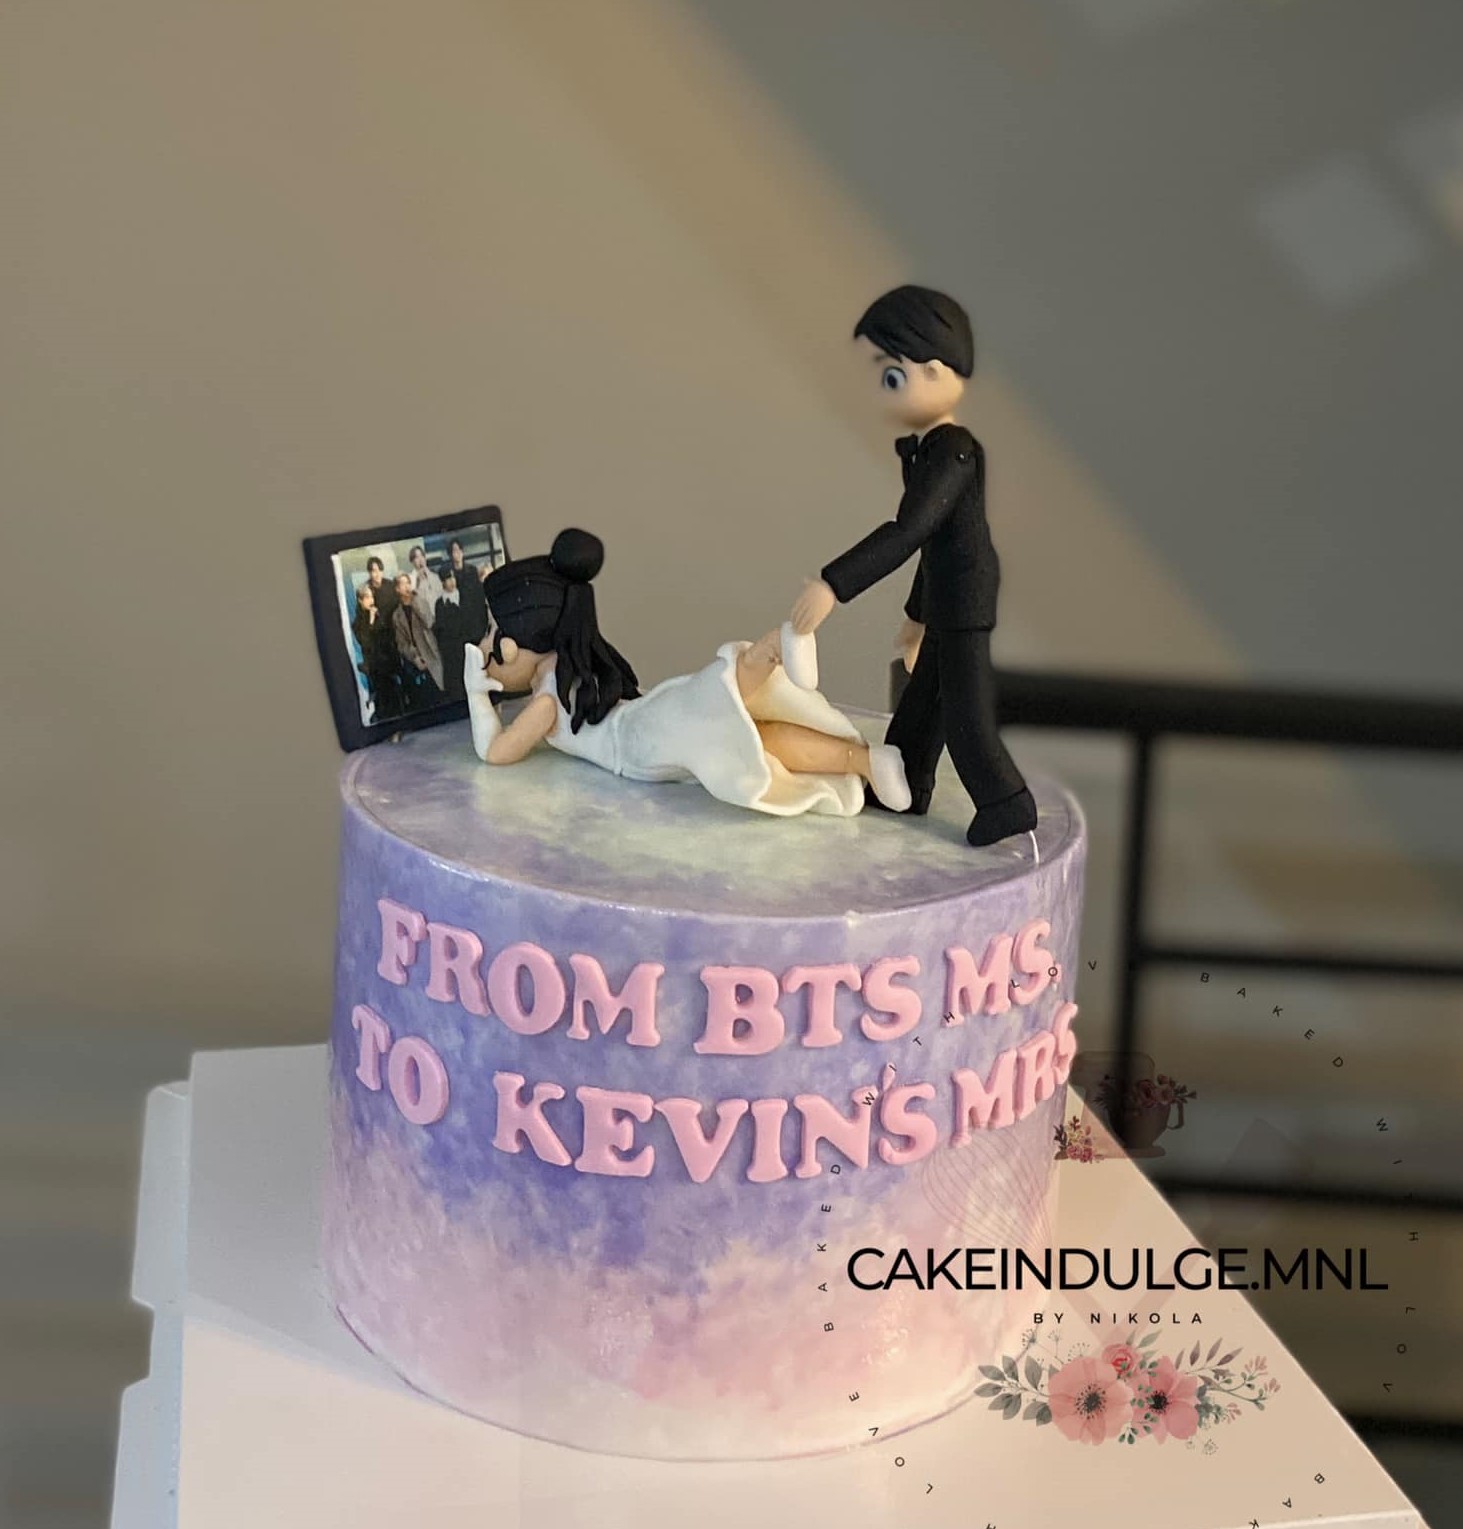 BTS Cake Online | BTS Themed Cakes for Birthday | BTS Army Cake